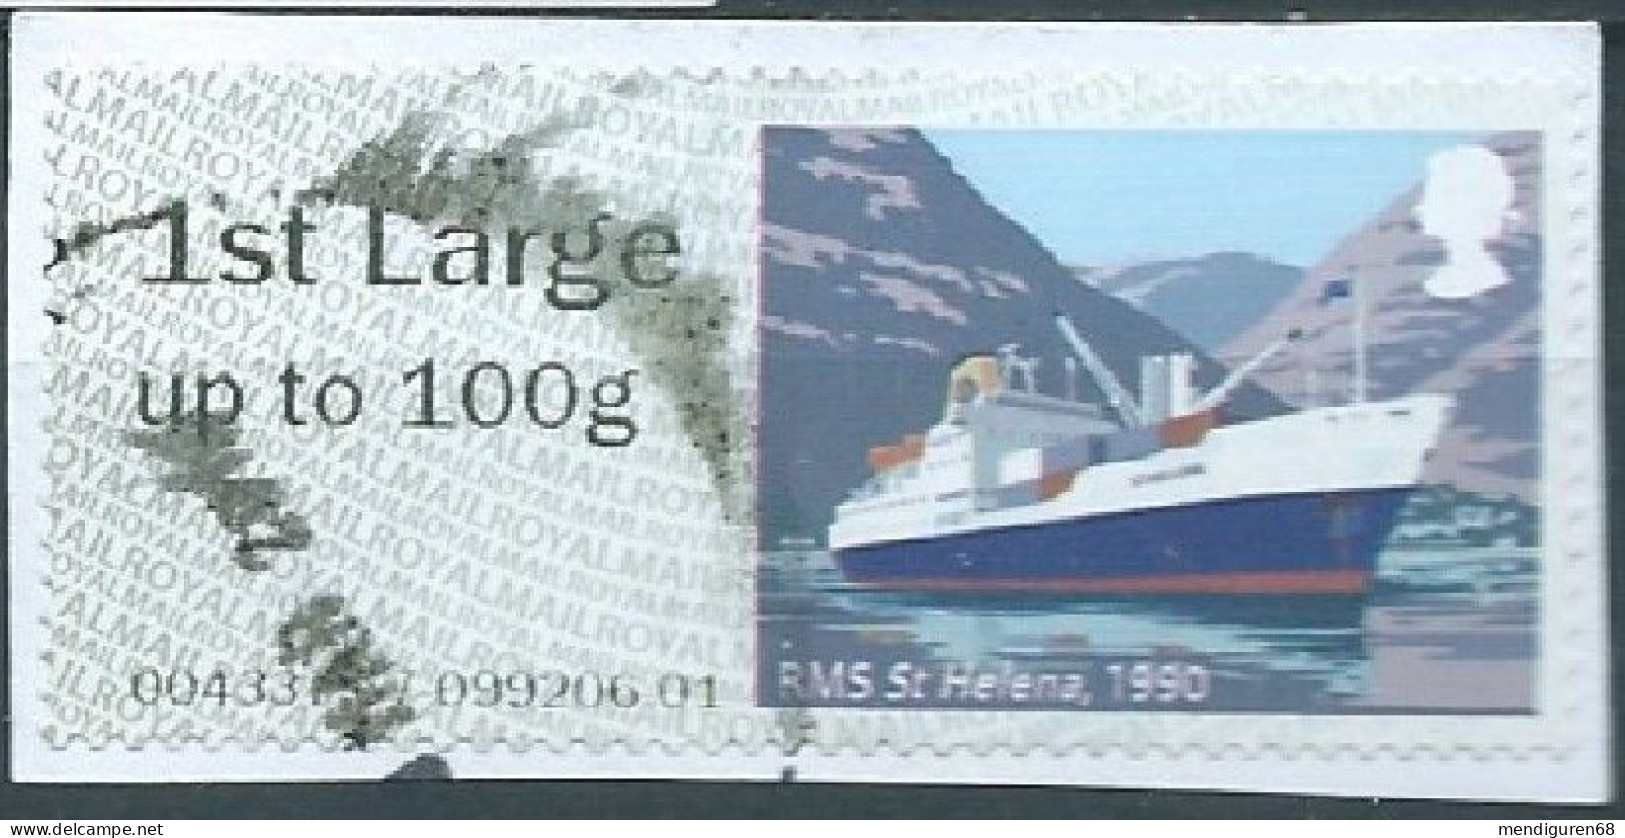 GROSBRITANNIEN GRANDE BRETAGNE GB 2018 POST&GO HERITAGE MAIL BY SEA:RMS ST HELENA FC Upto 100g SG FS212 MI AT144 YT D143 - Post & Go Stamps